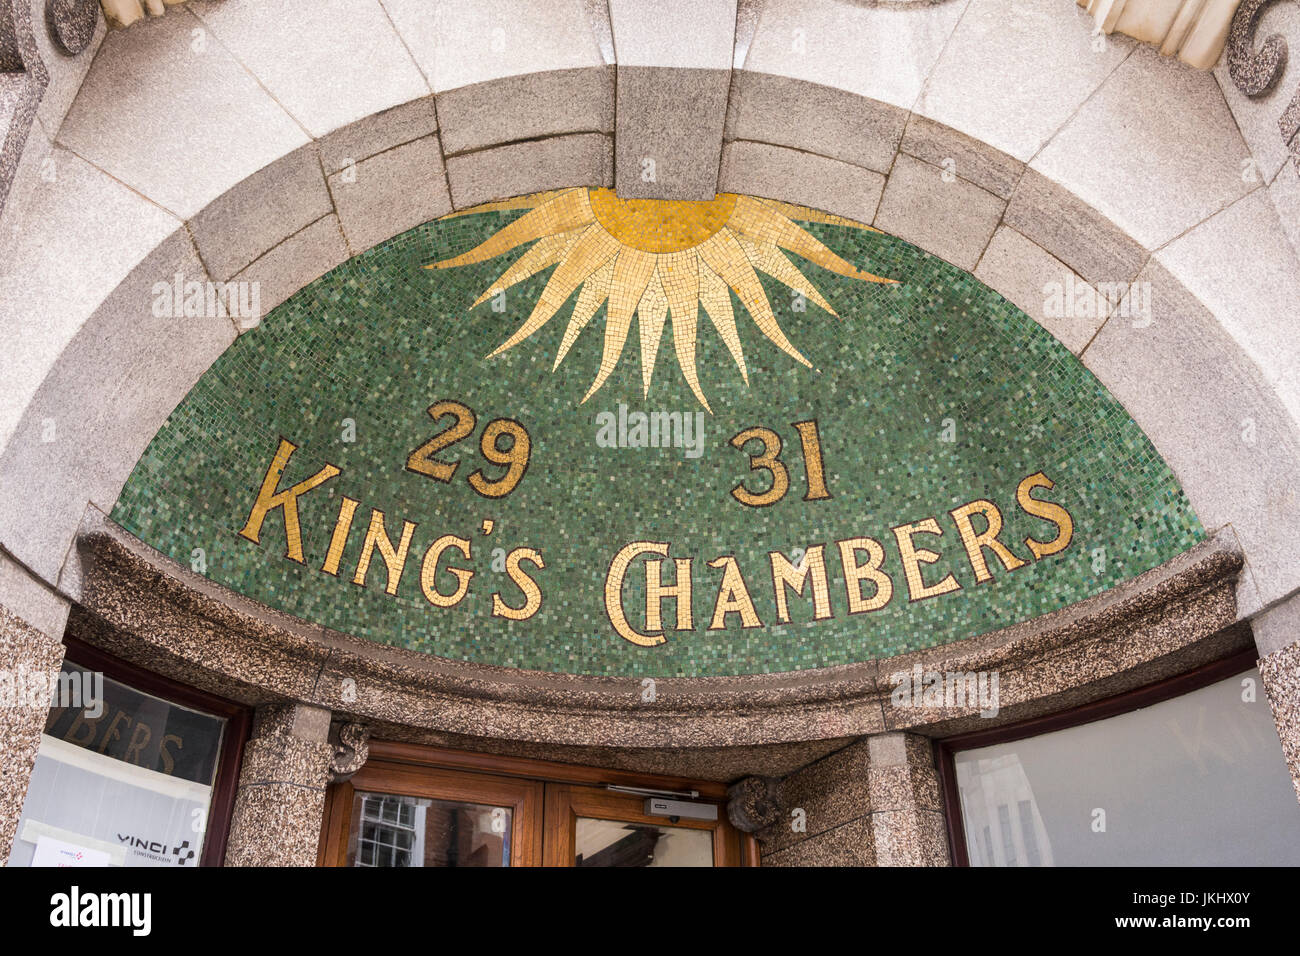 King's Chambers, Portugal Street Stock Photo